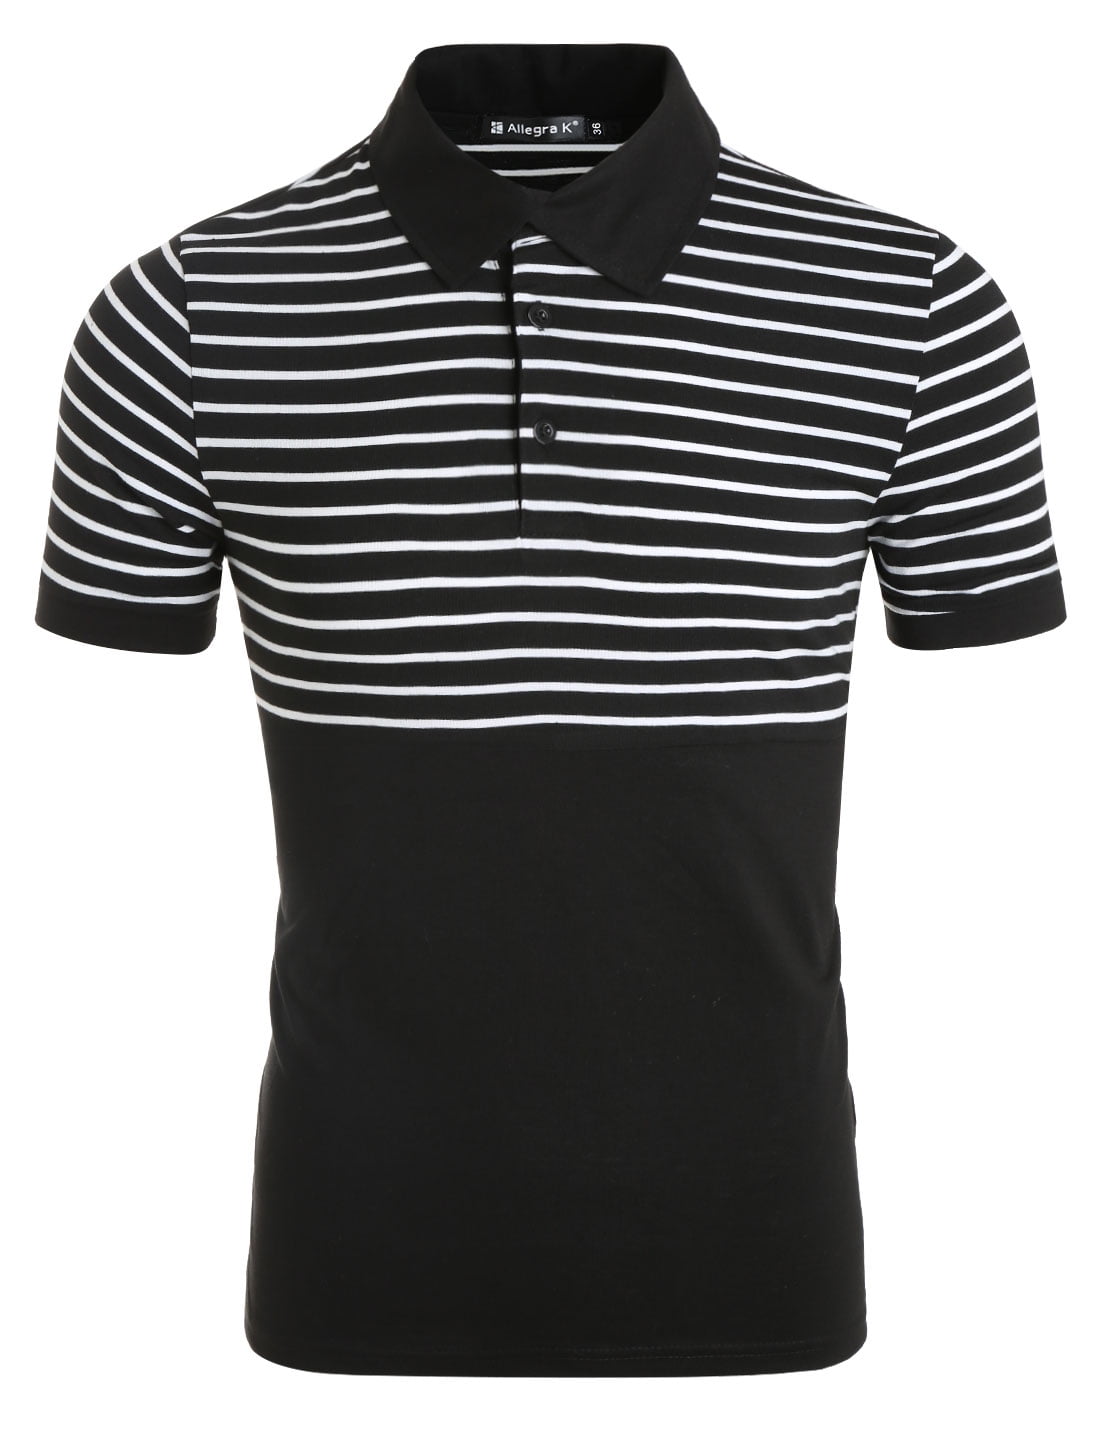 Men Striped Leisure Short Sleeves Polo Shirt Black S | Walmart Canada